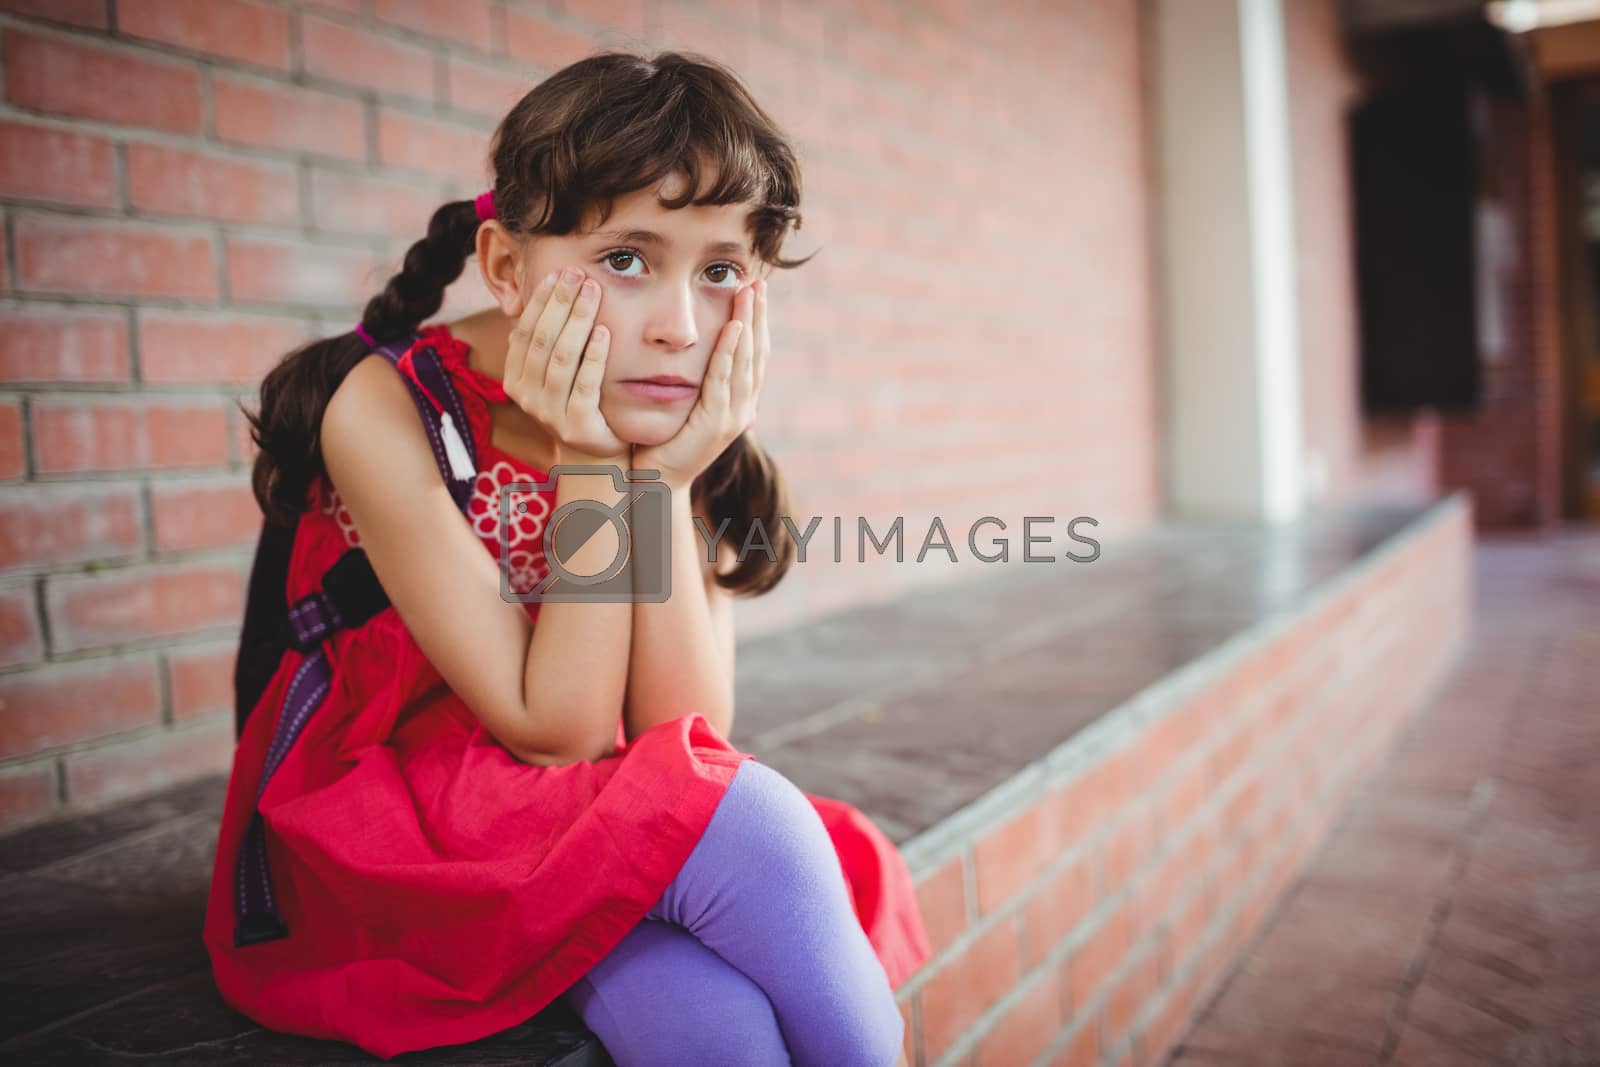 Royalty free image of Girl holding her cheek by Wavebreakmedia